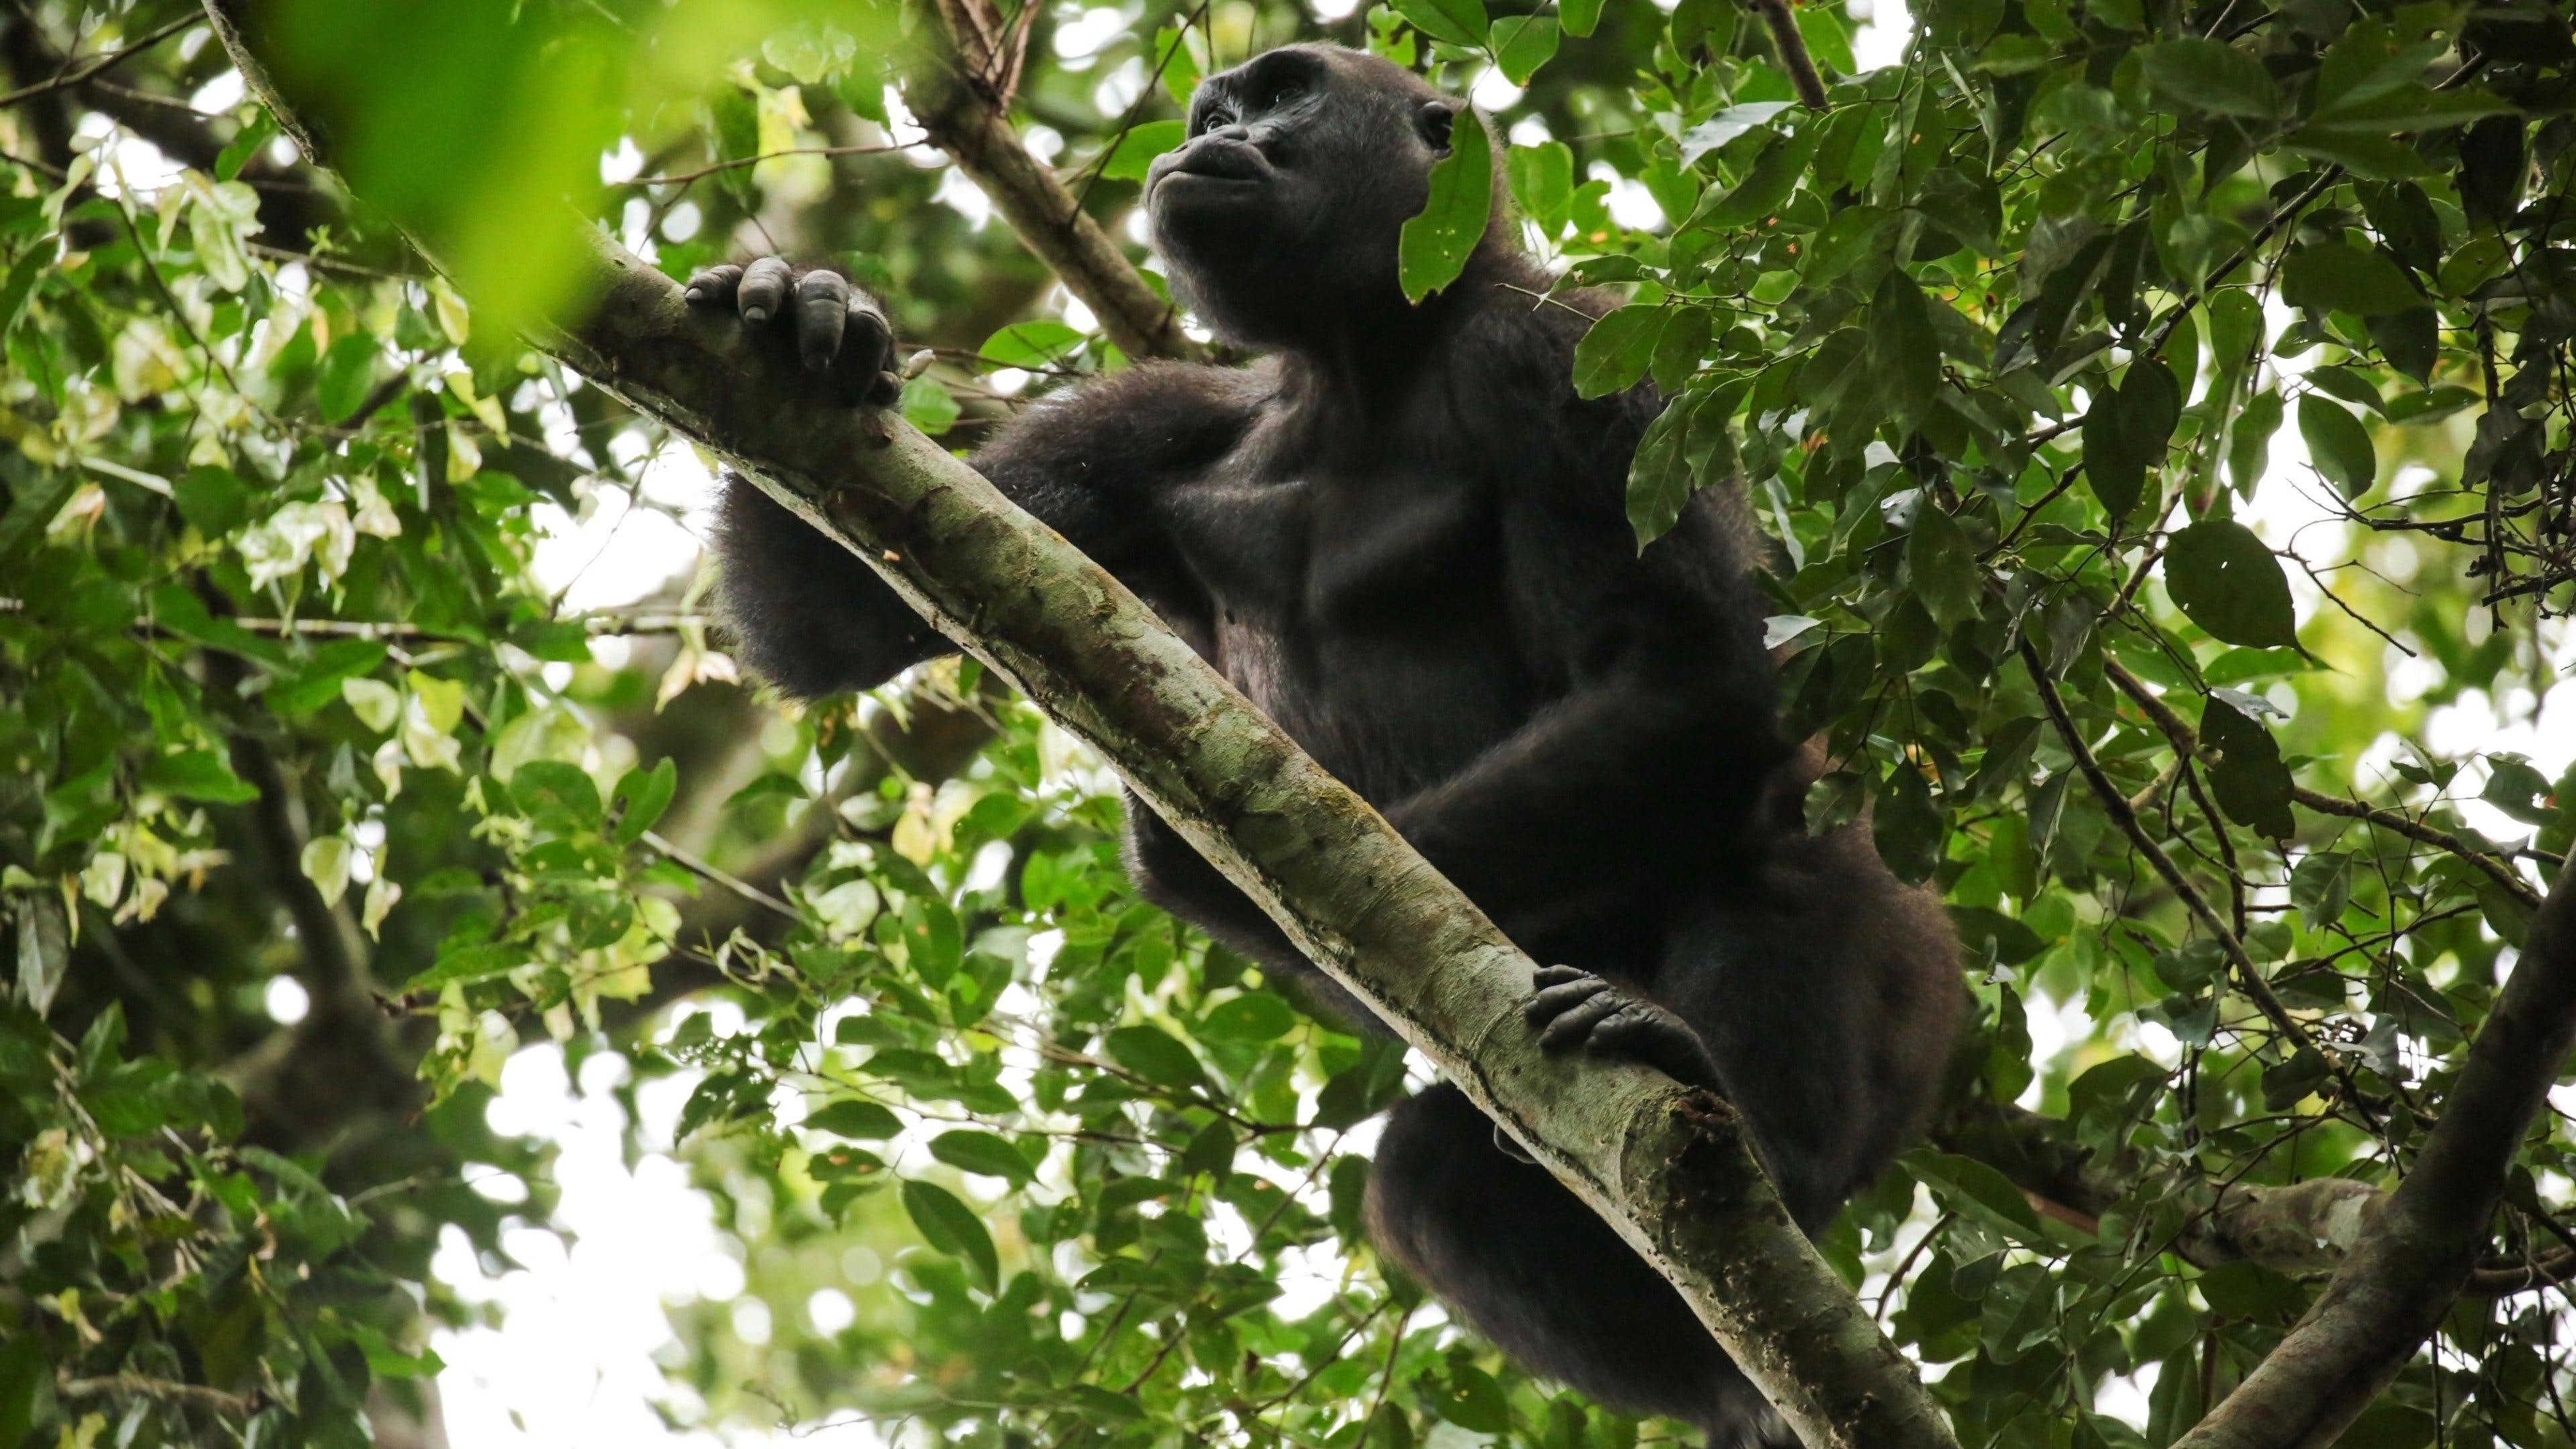 Gorillas of Gabon backdrop